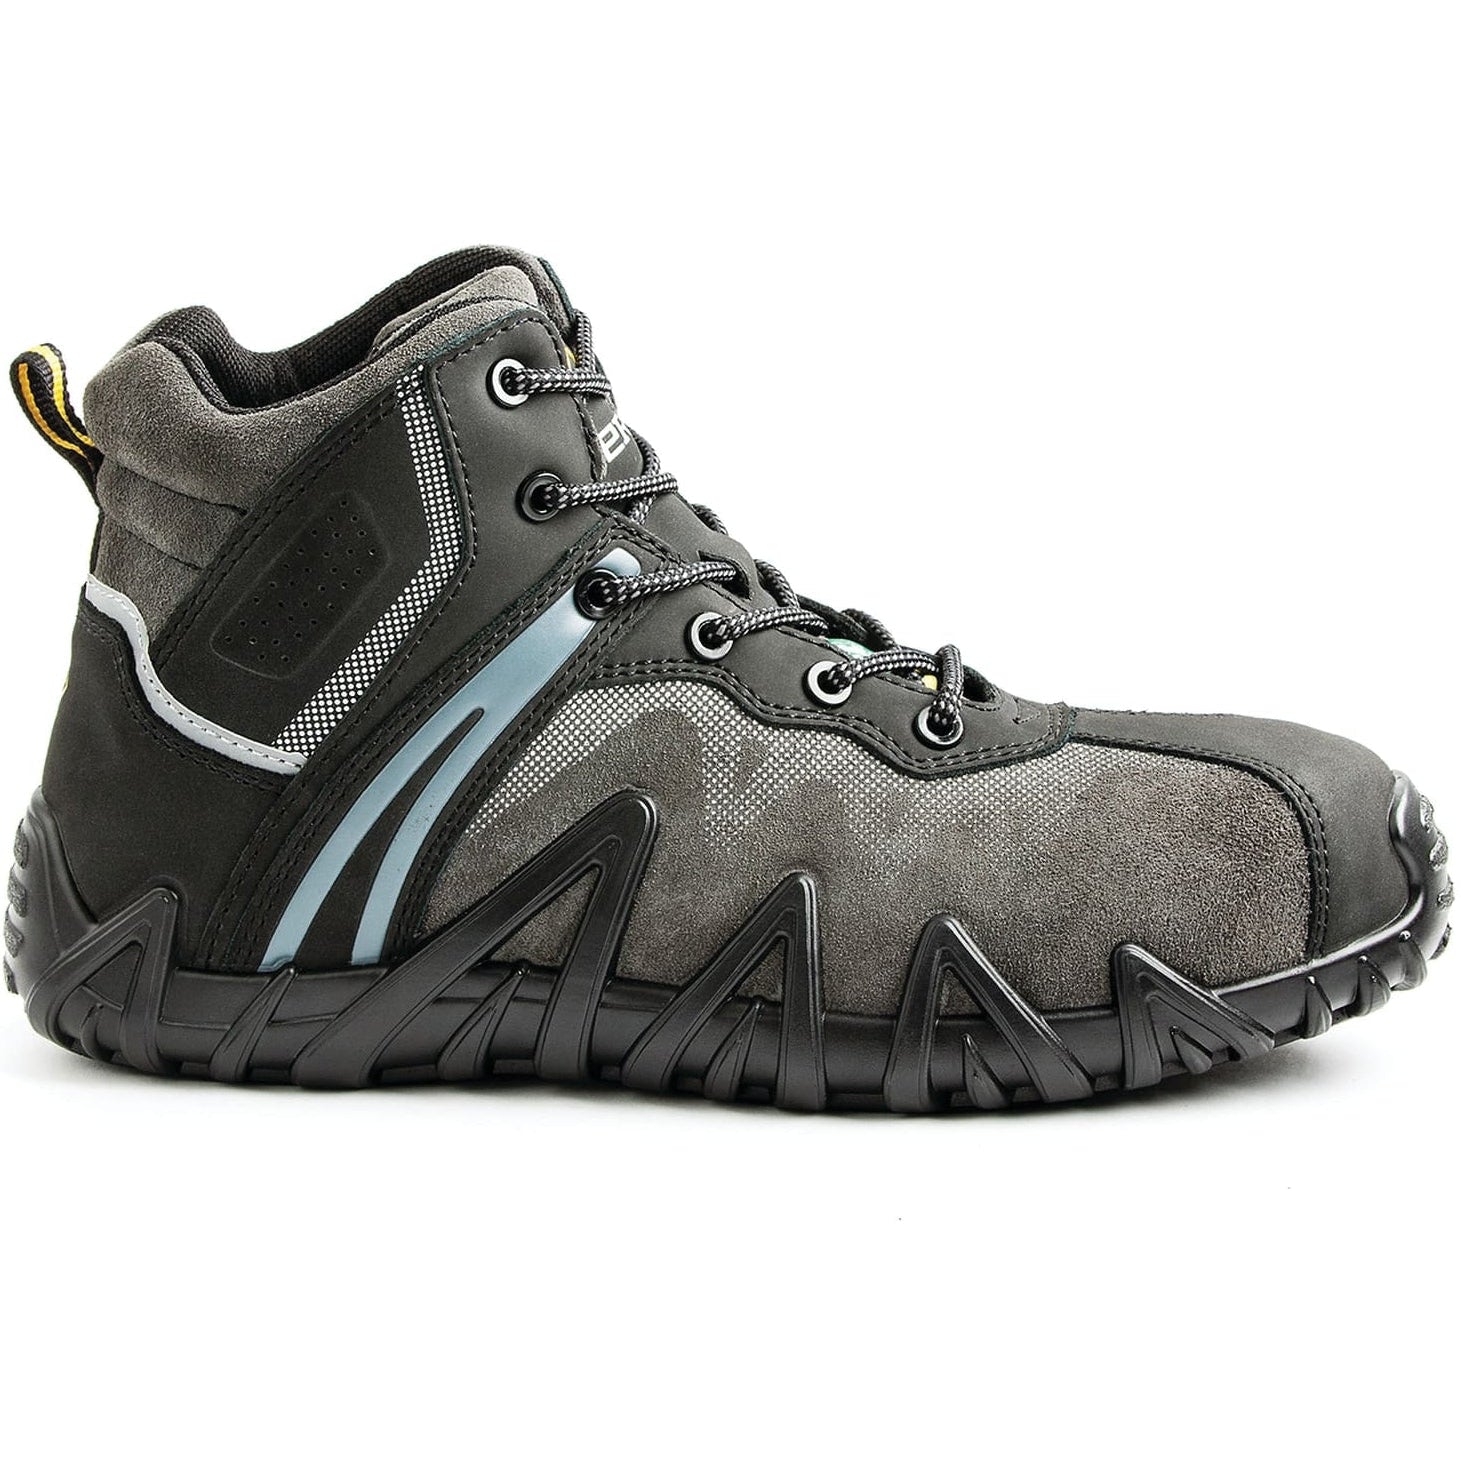 Terra Men's Venom Mid Comp Toe WP Safety Work Shoe -Black- R8285B  - Overlook Boots